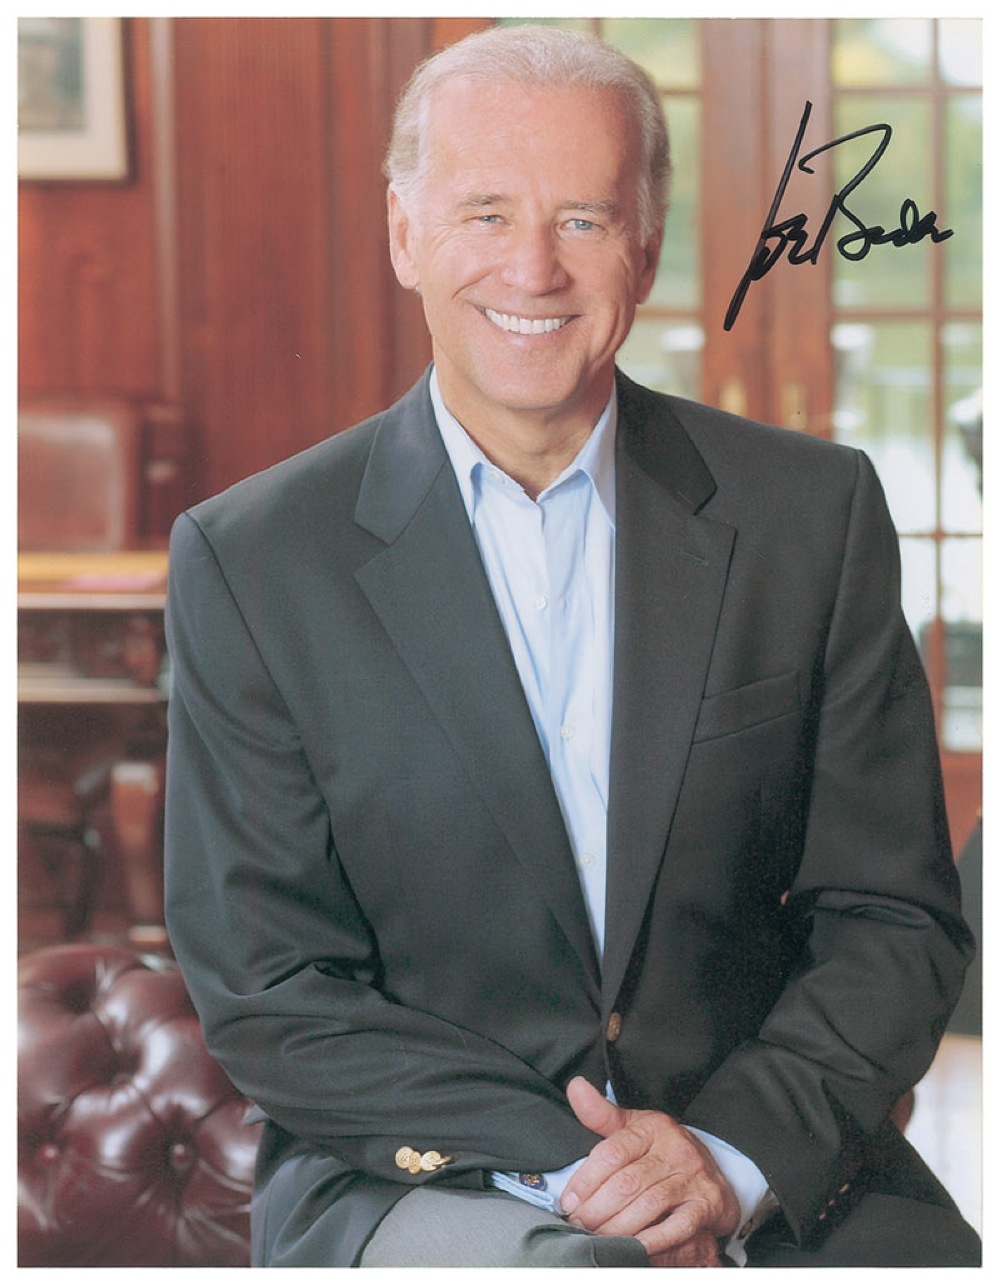 Lot #138 Joe Biden